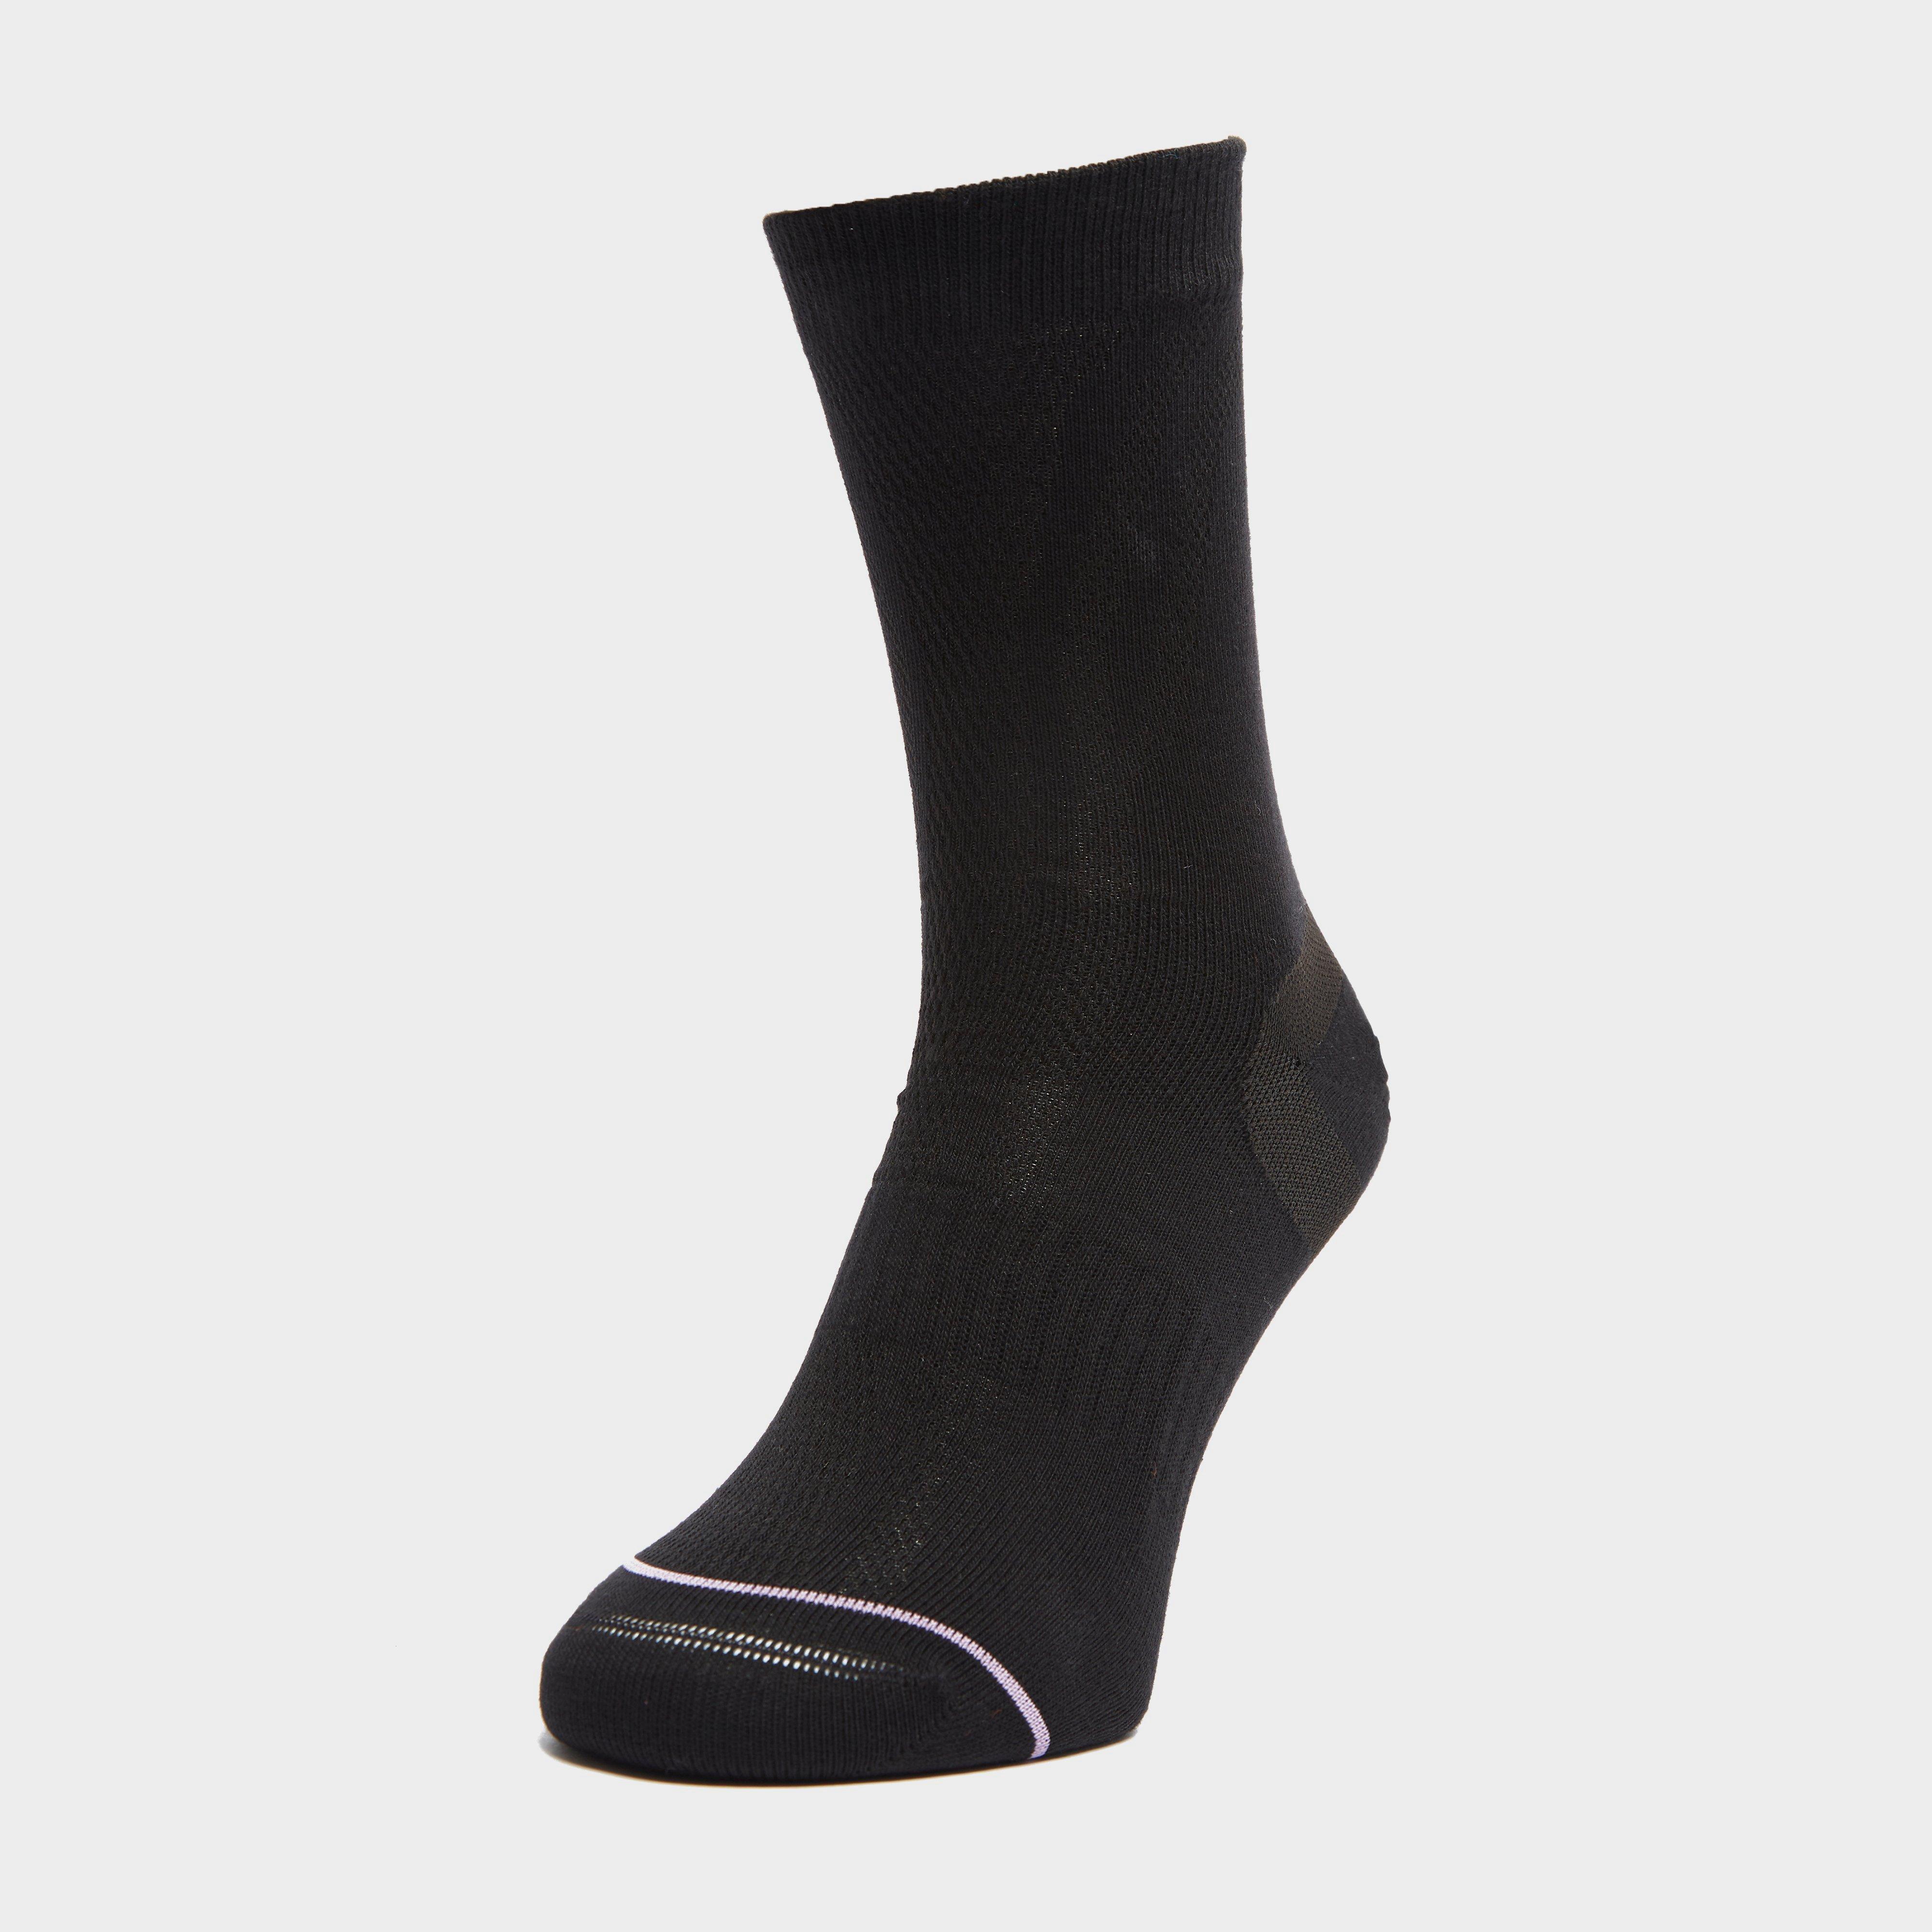 1000 Mile Tactel Ultimate Liner Socks - Black/black  Black/black